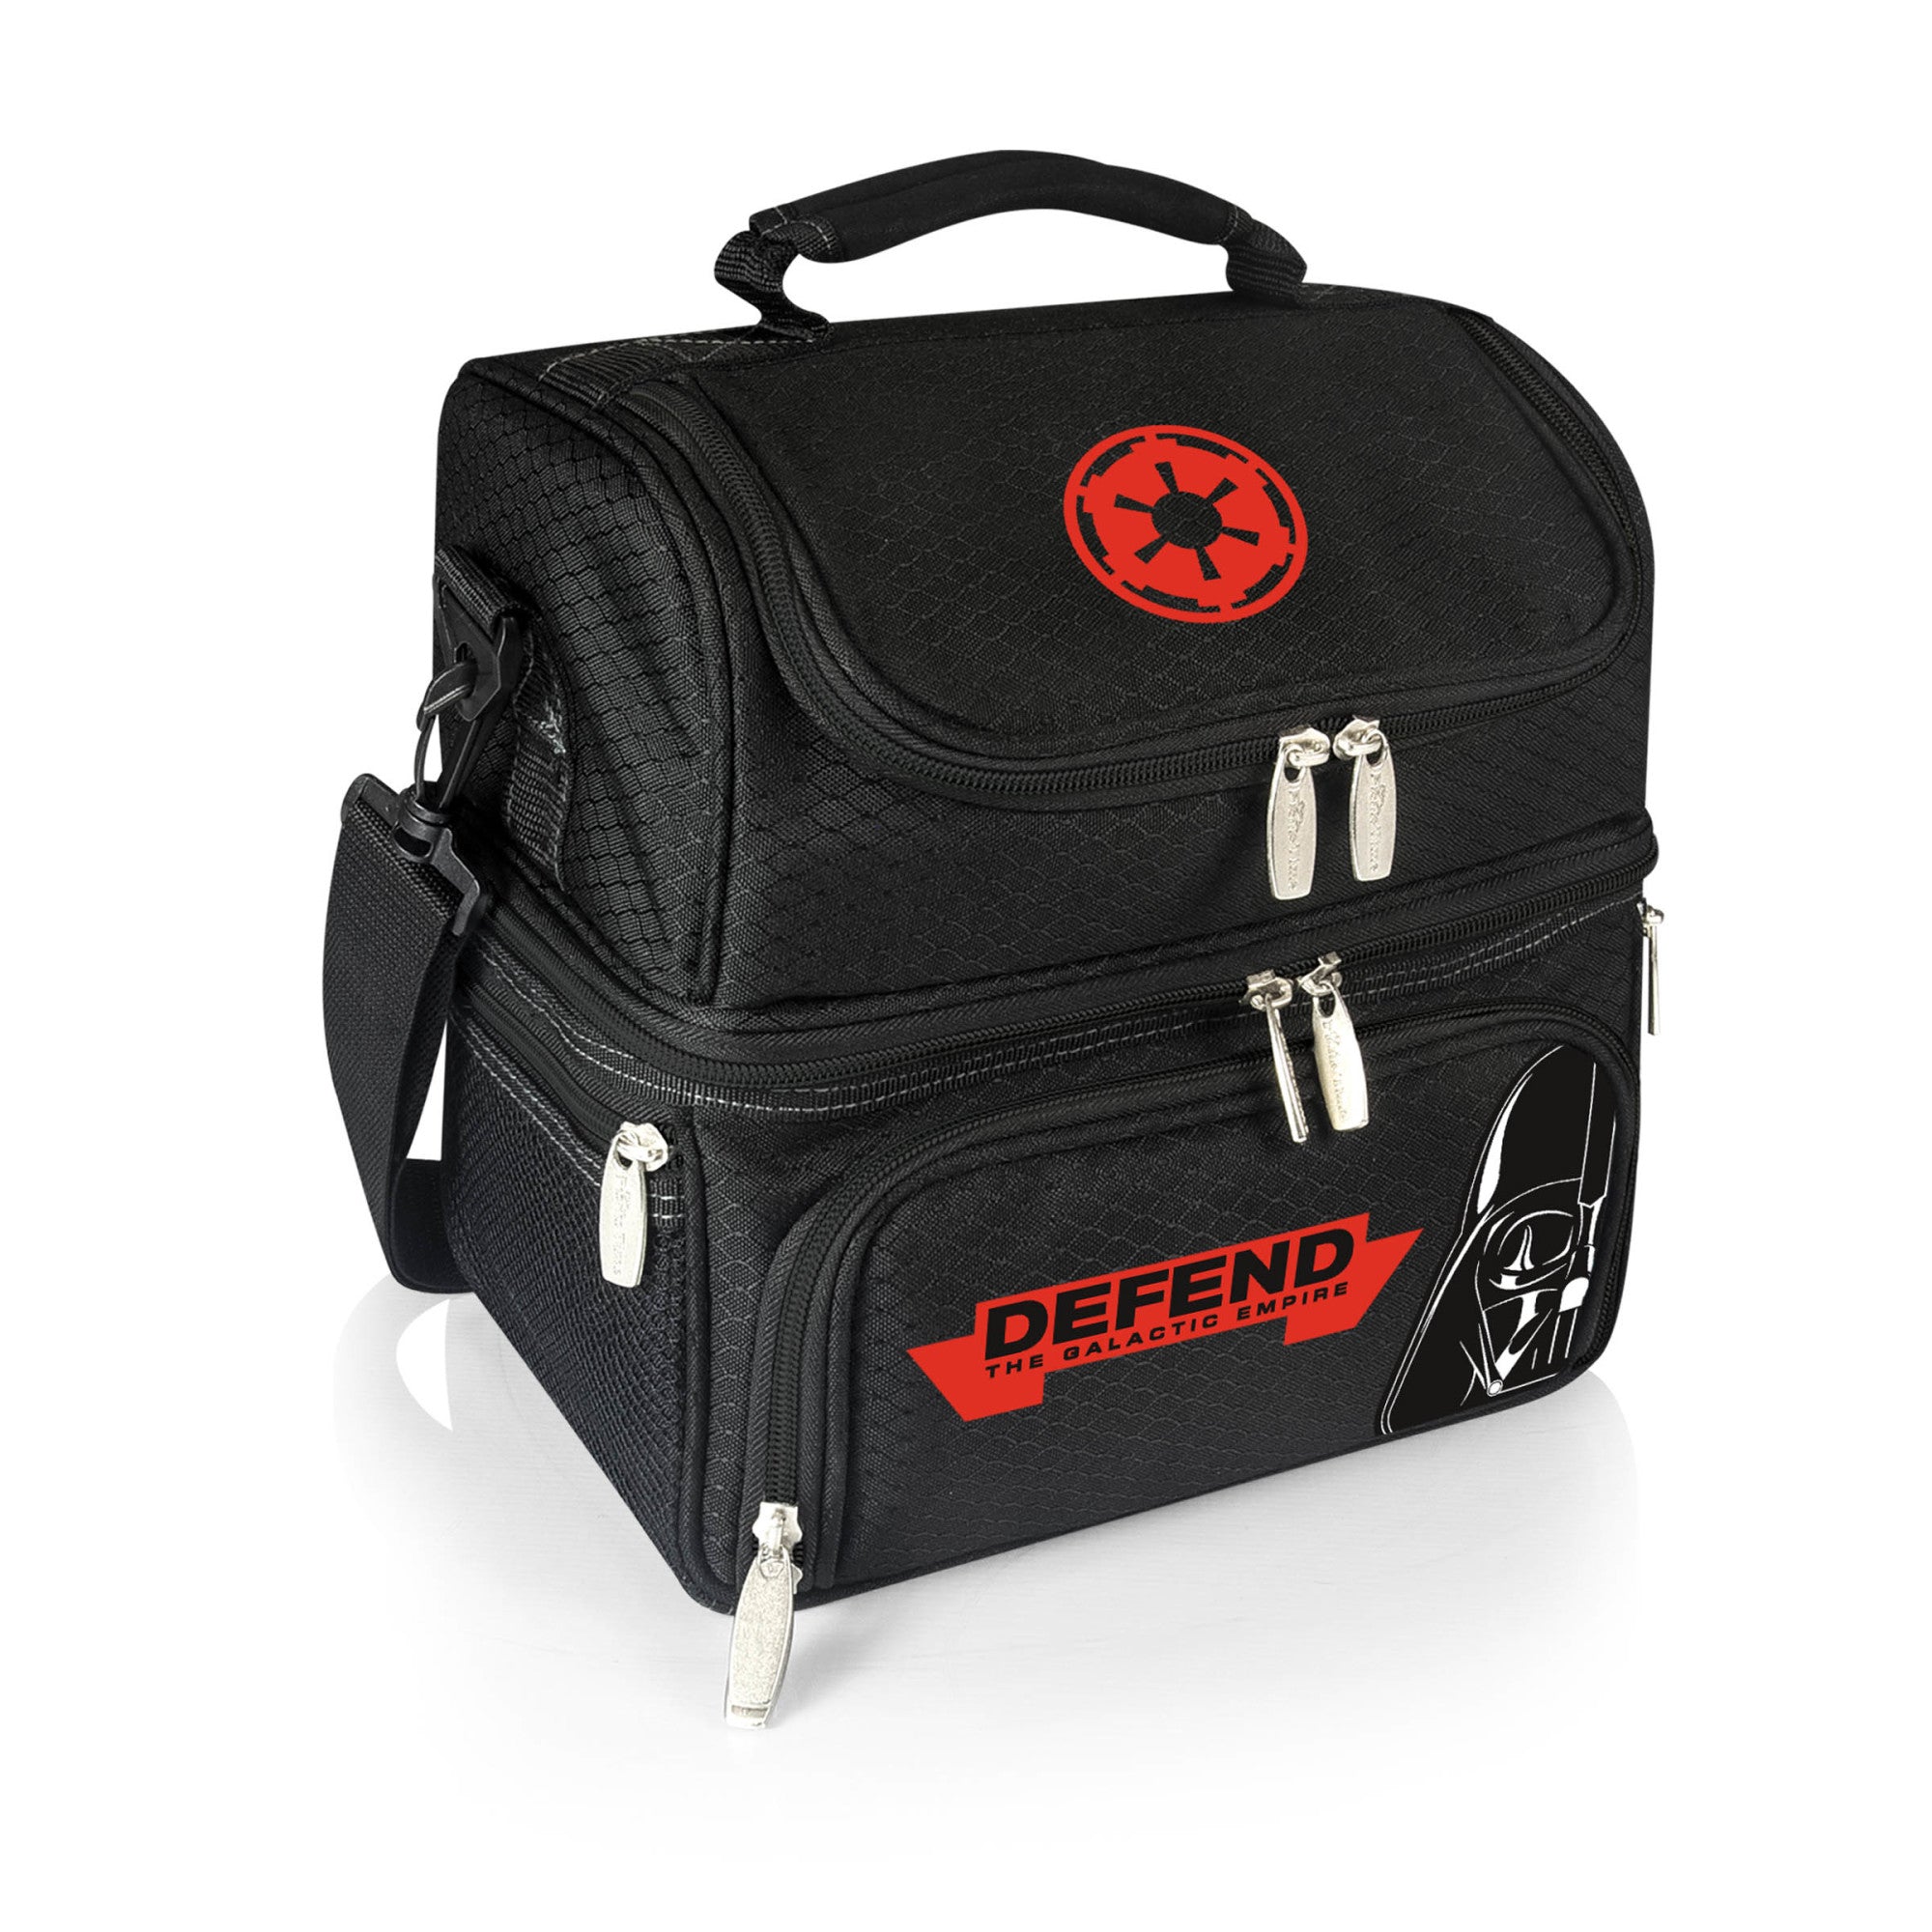 Star Wars Darth Vader - Pranzo Lunch Bag Cooler with Utensils